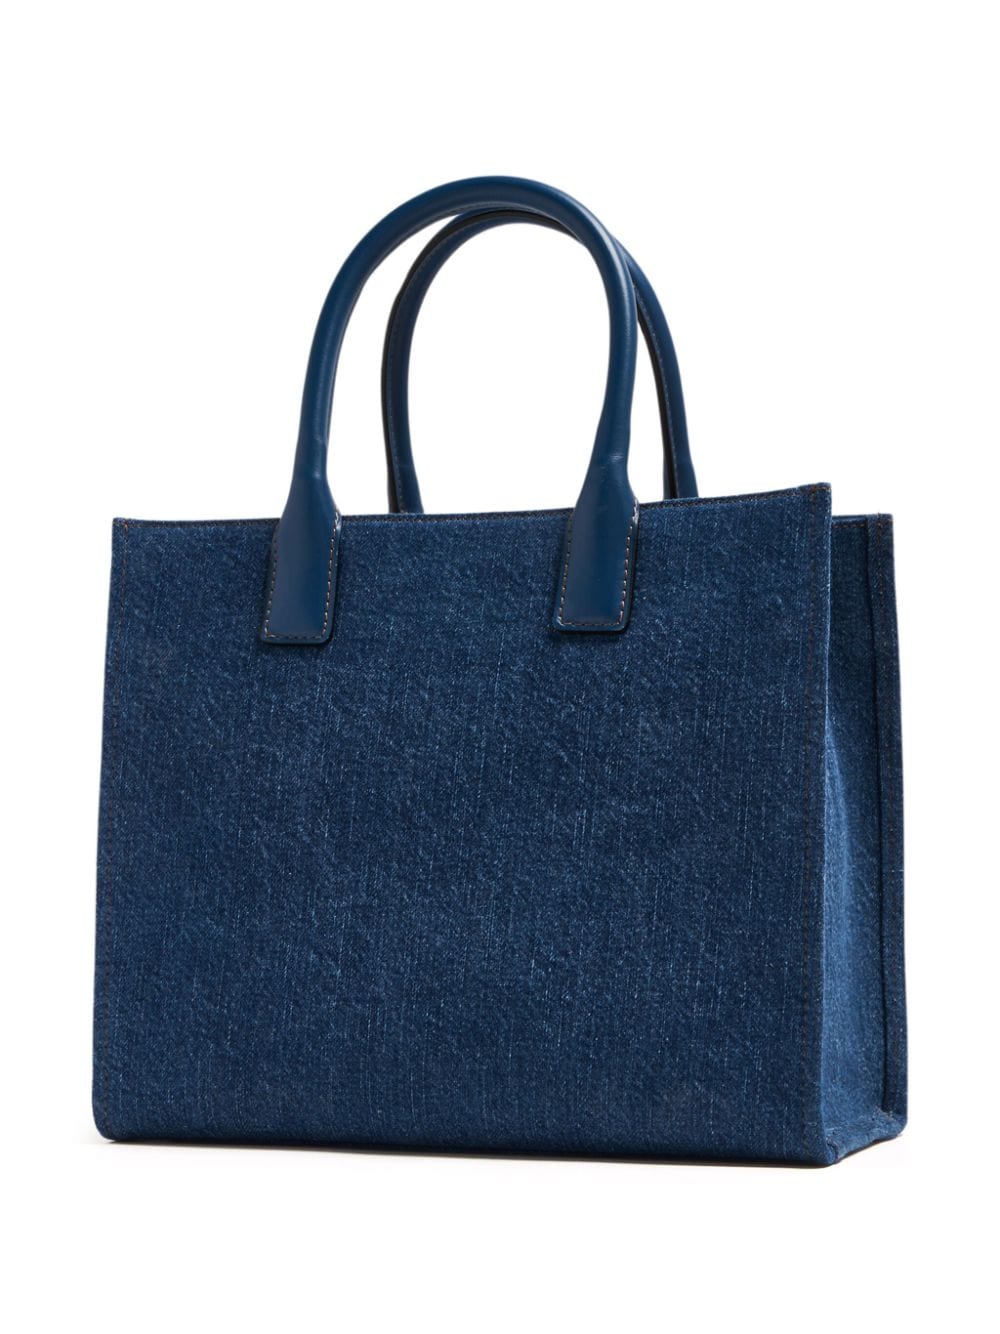 VERSACE The MEDUSA DENIM Tote Handbag - Navy Blue with Gold Hardware